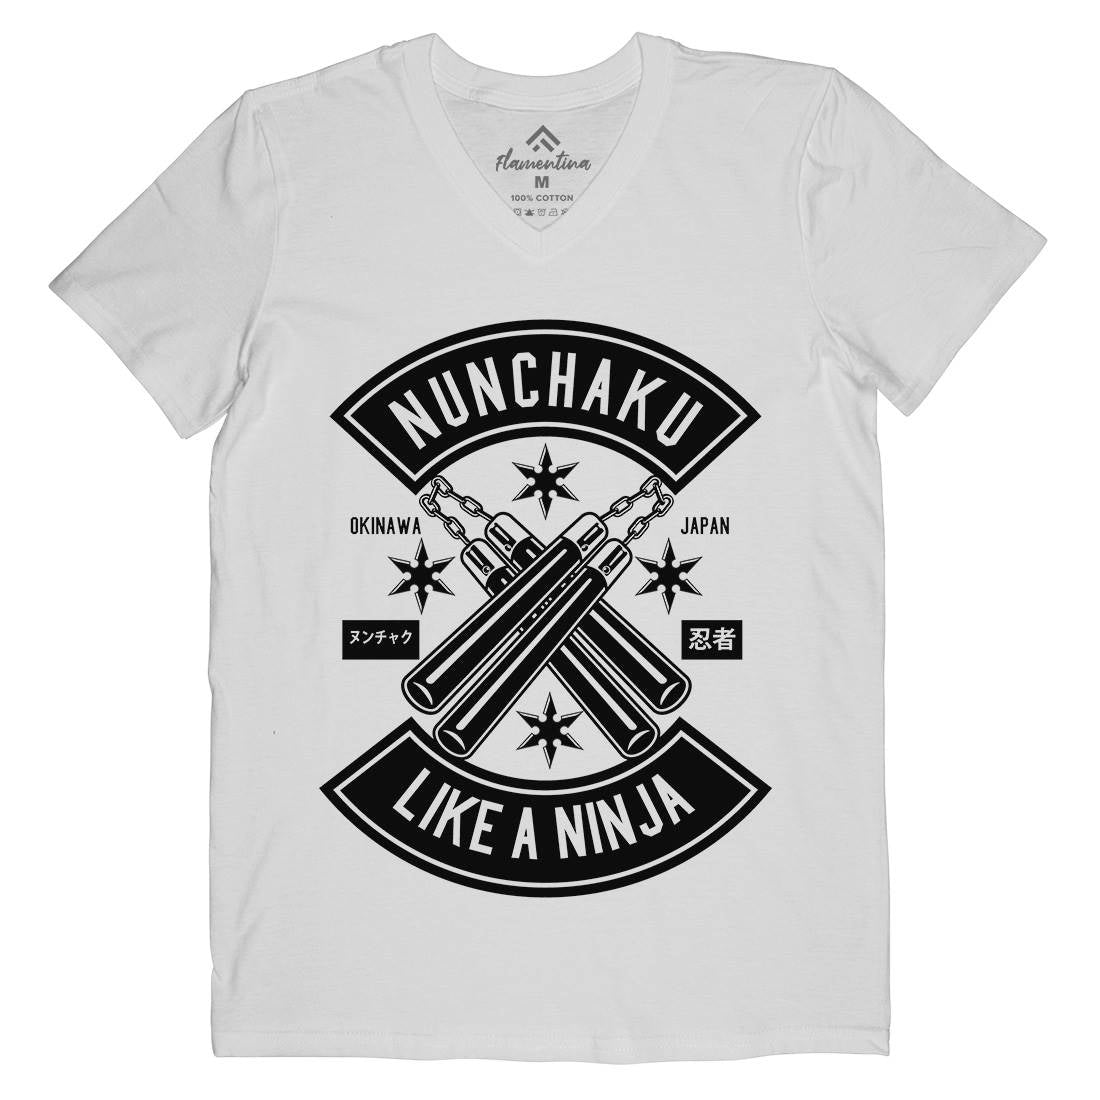 Nunchaku Mens Organic V-Neck T-Shirt Sport B589